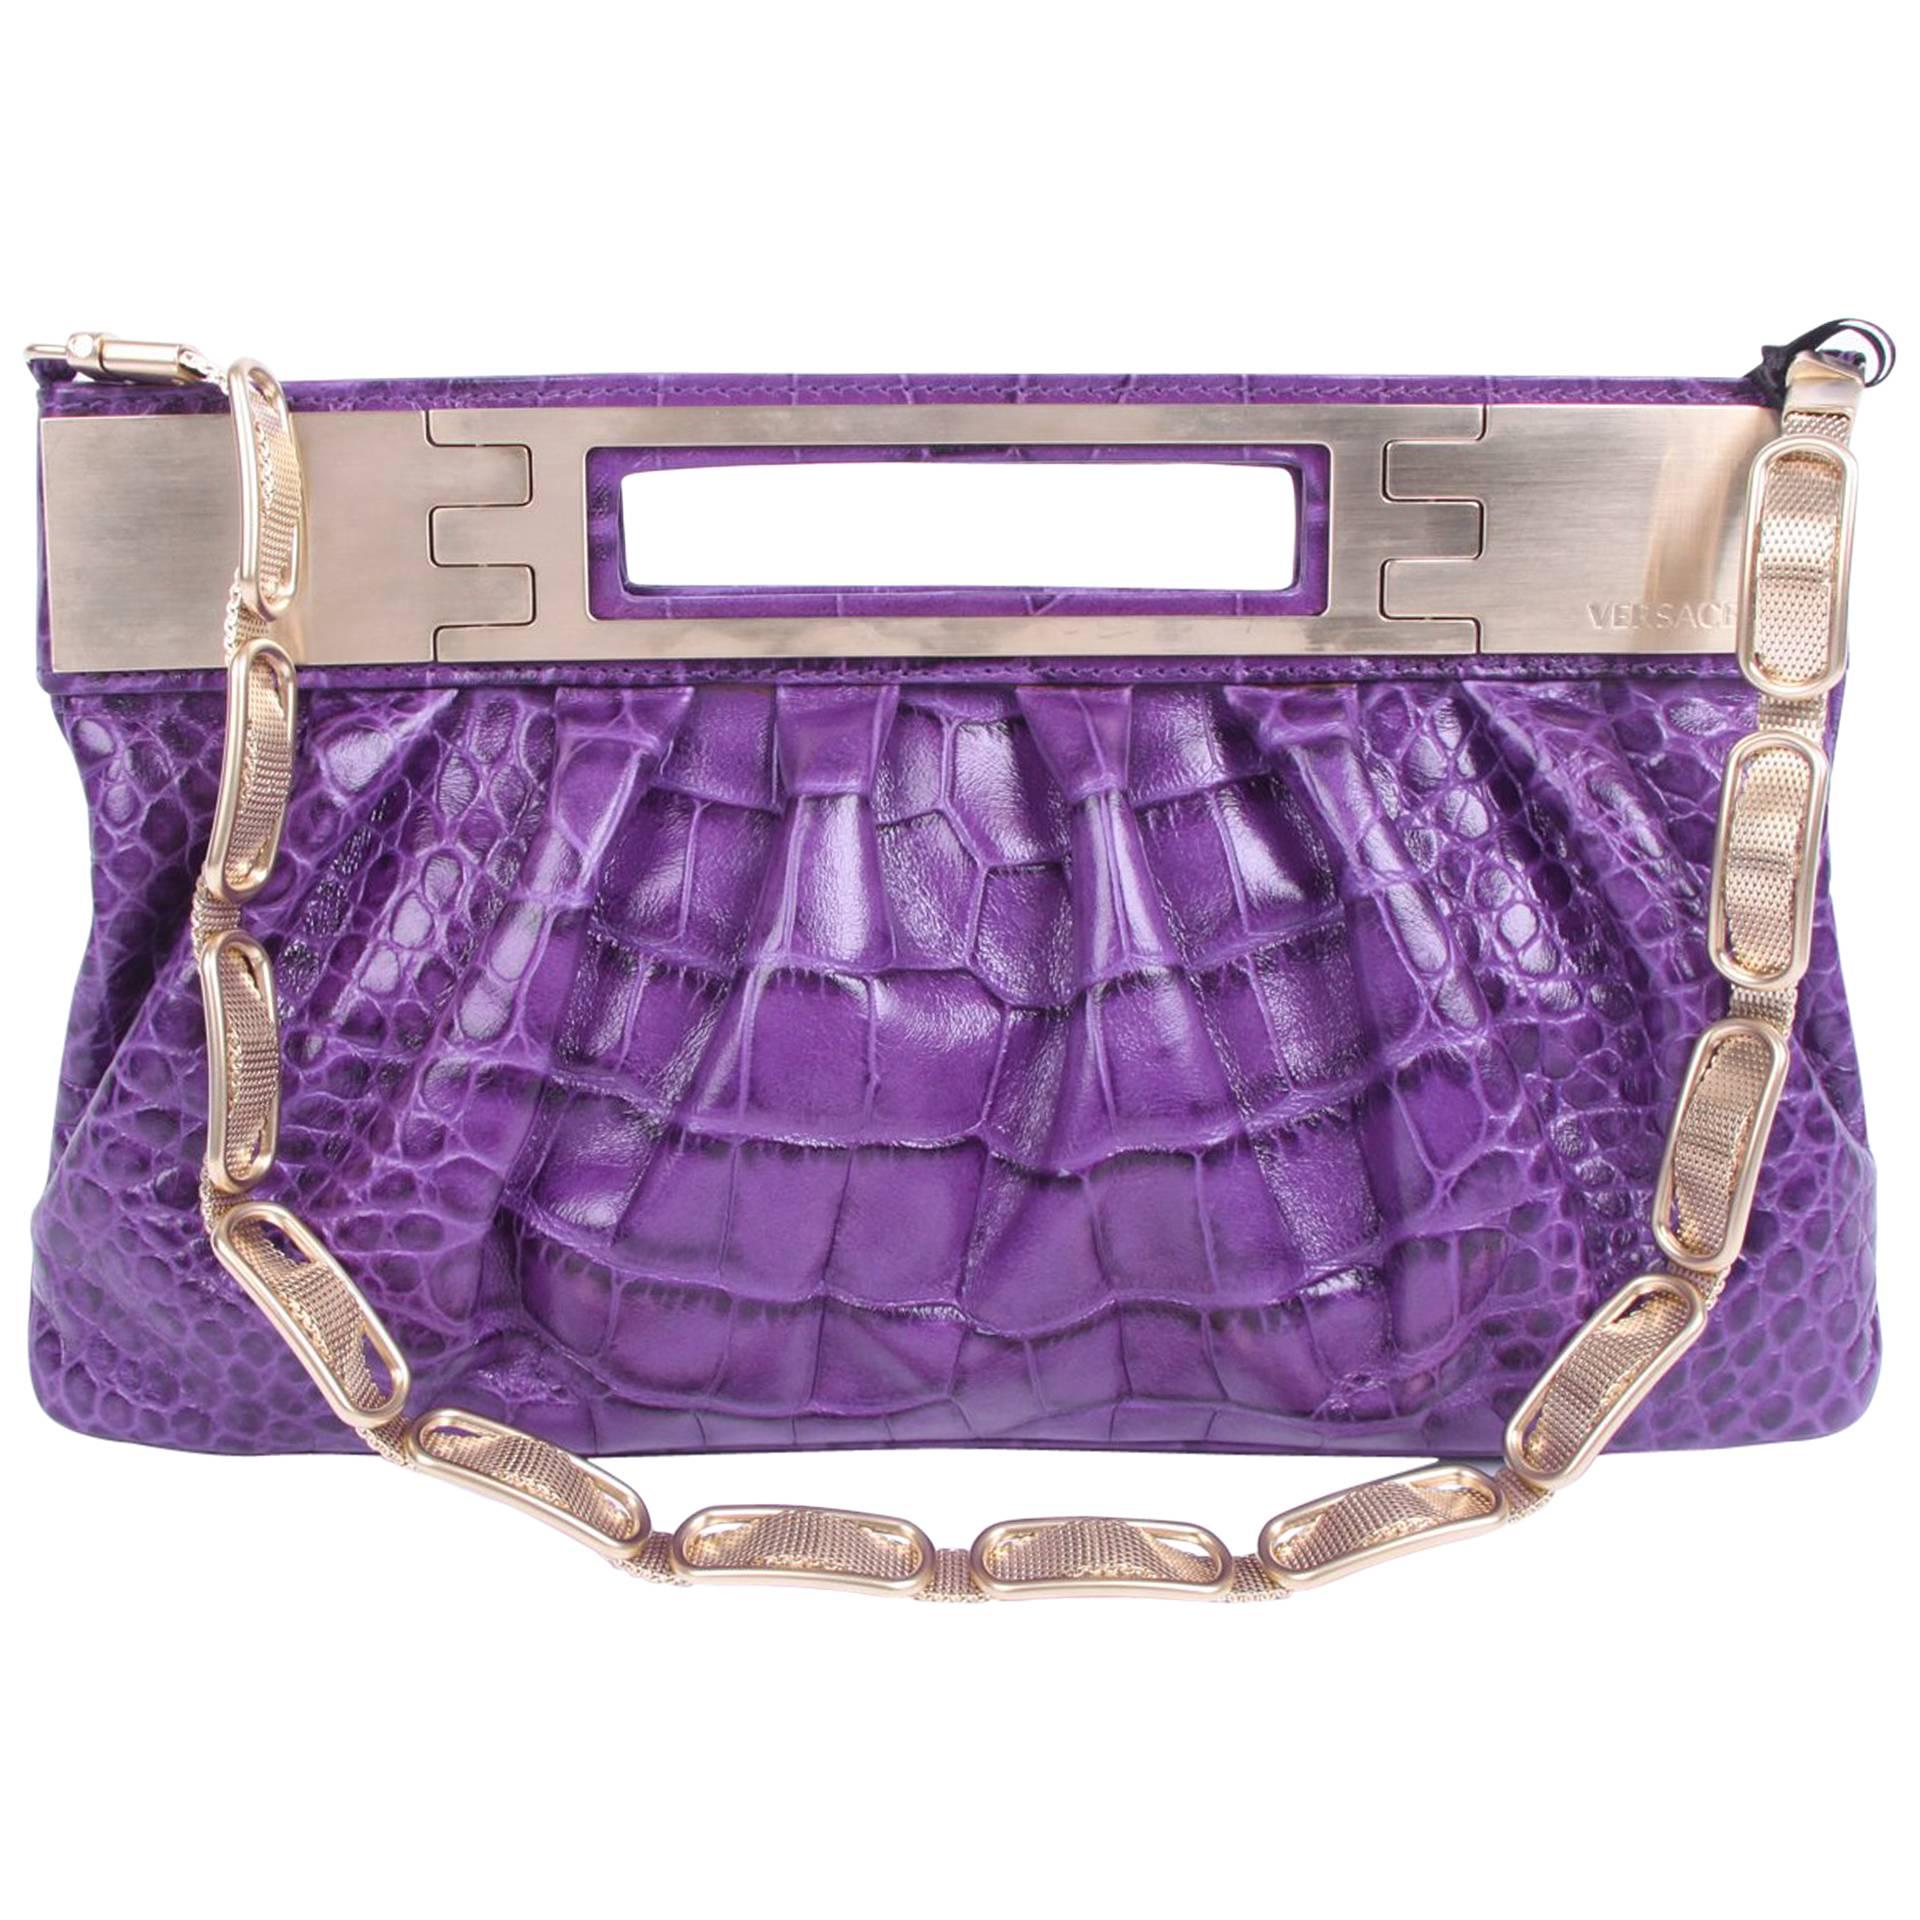 Versace Leather Clutch Croco Print - purple 2008 For Sale